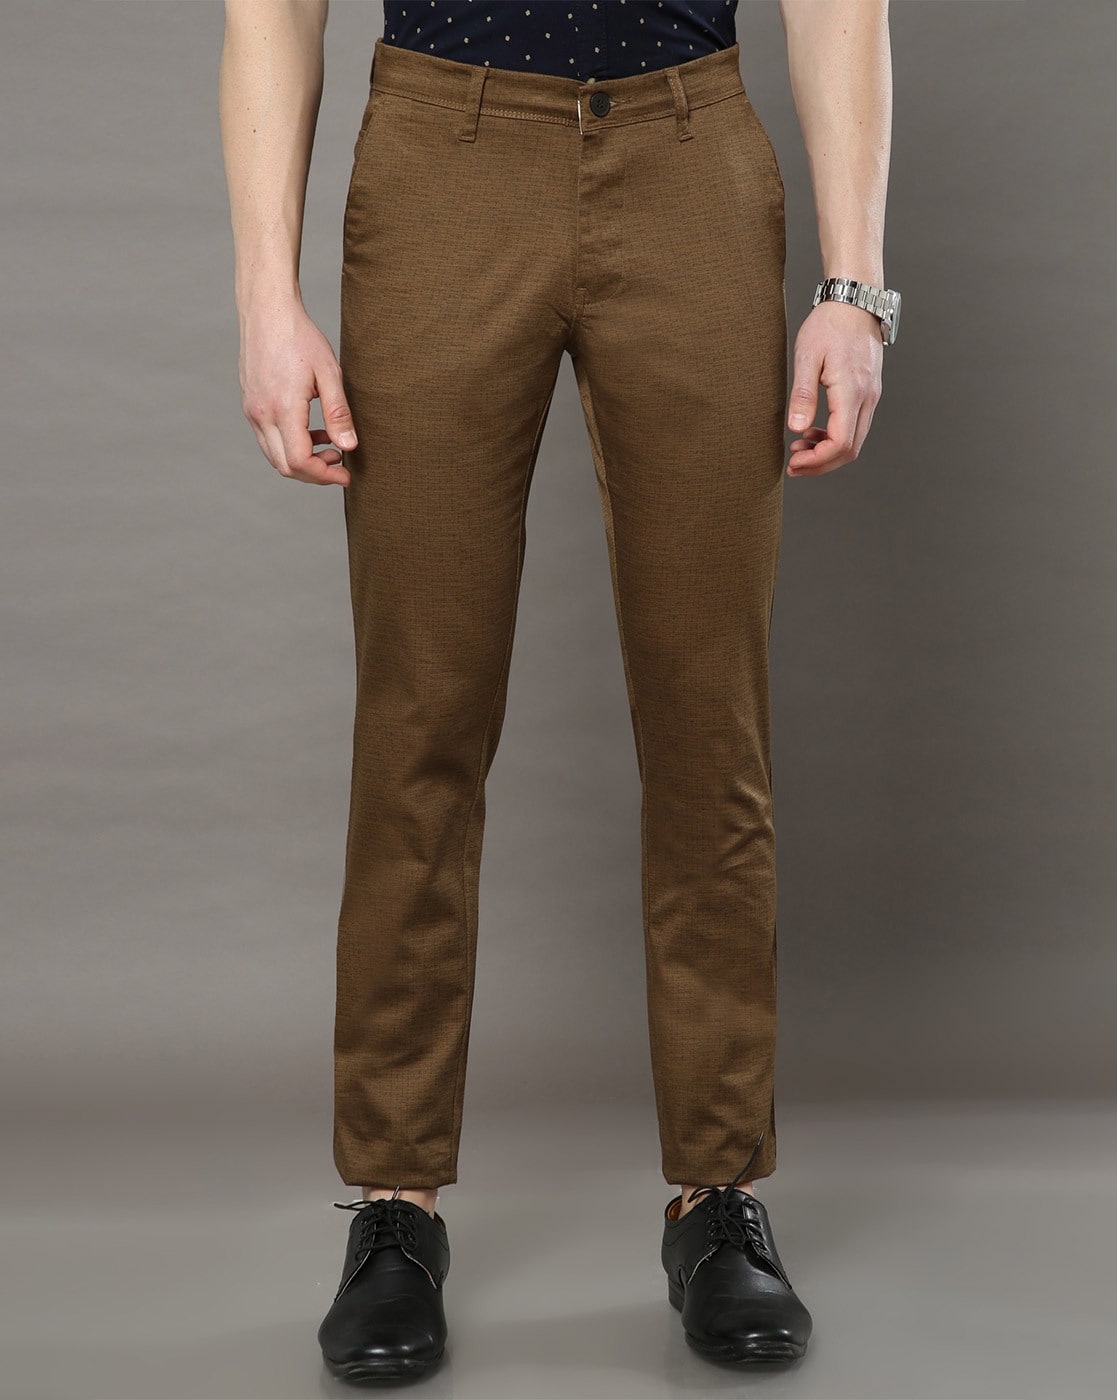 Men's Brown Dress Pants - Men''s Slacks - Express